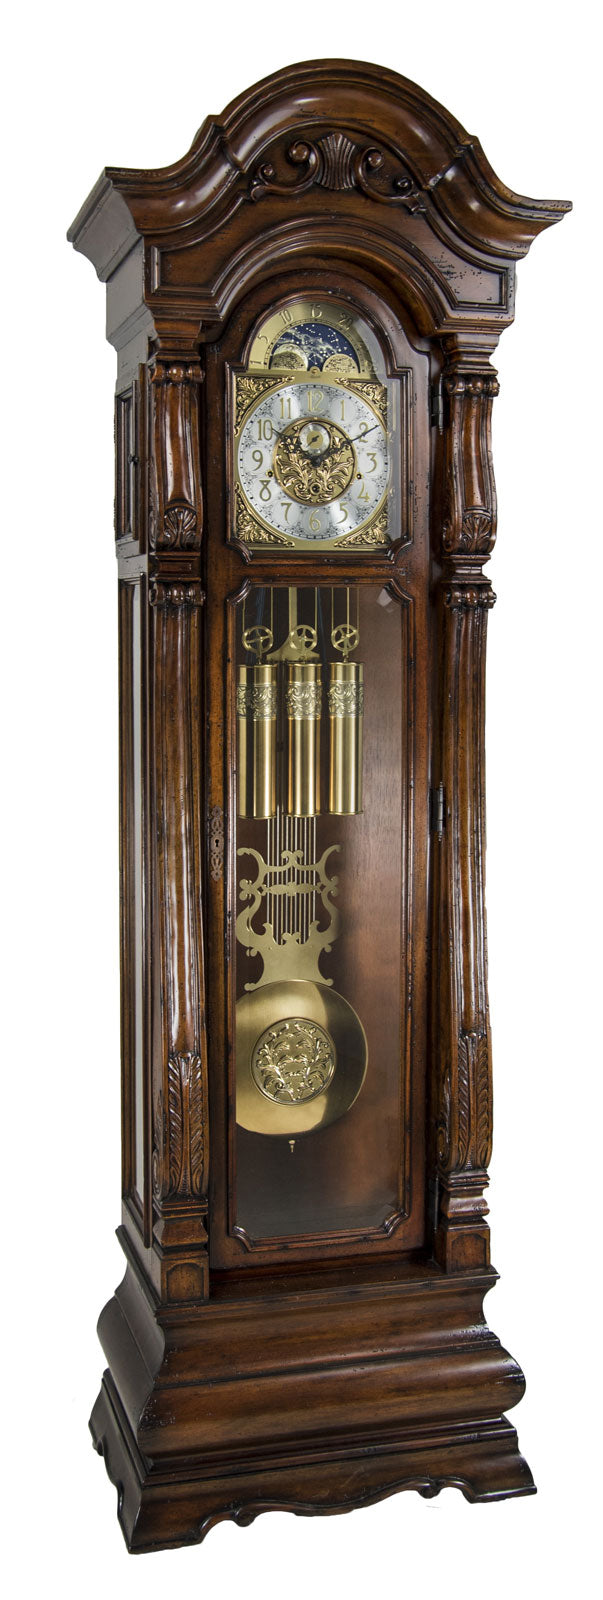 Salerno Grandfather Clock by Hermle Clocks